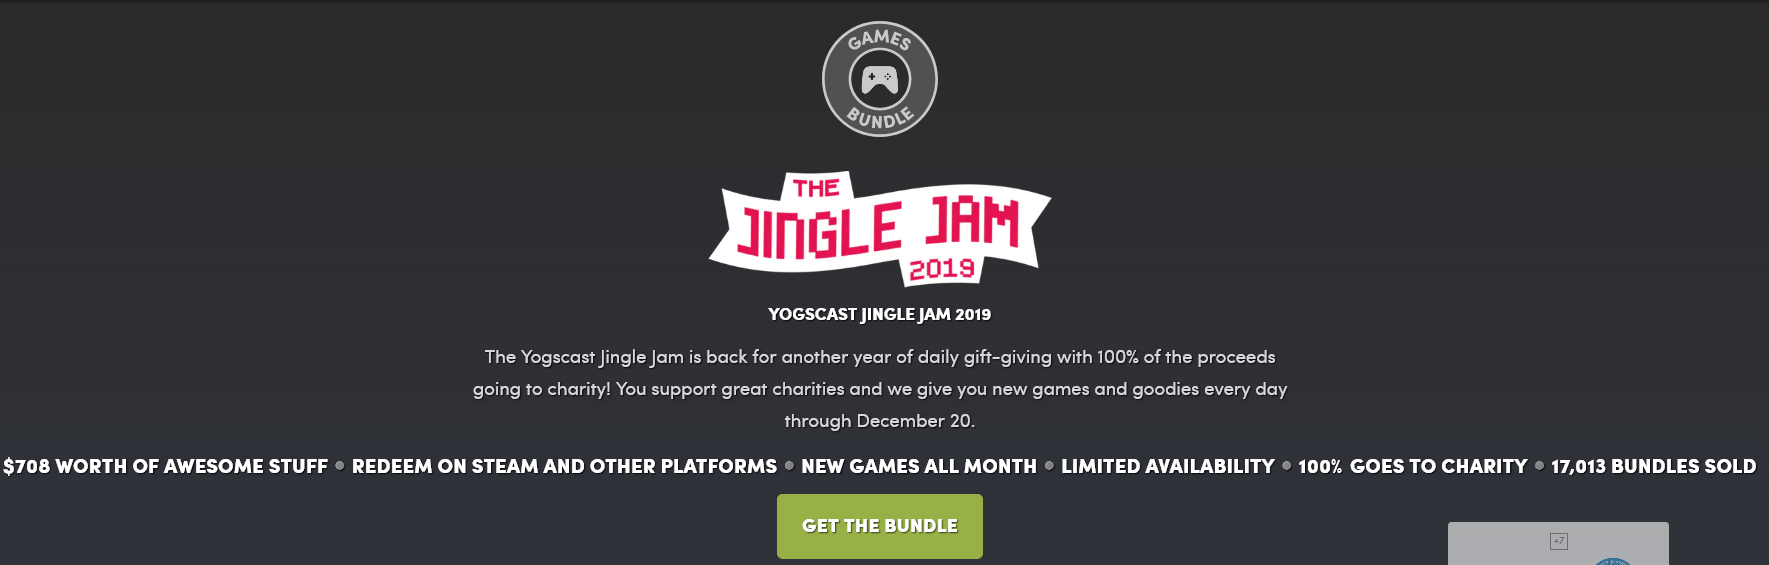 Screenshot_2019-12-02 Yogscast Jingle Jam 2019(1).png